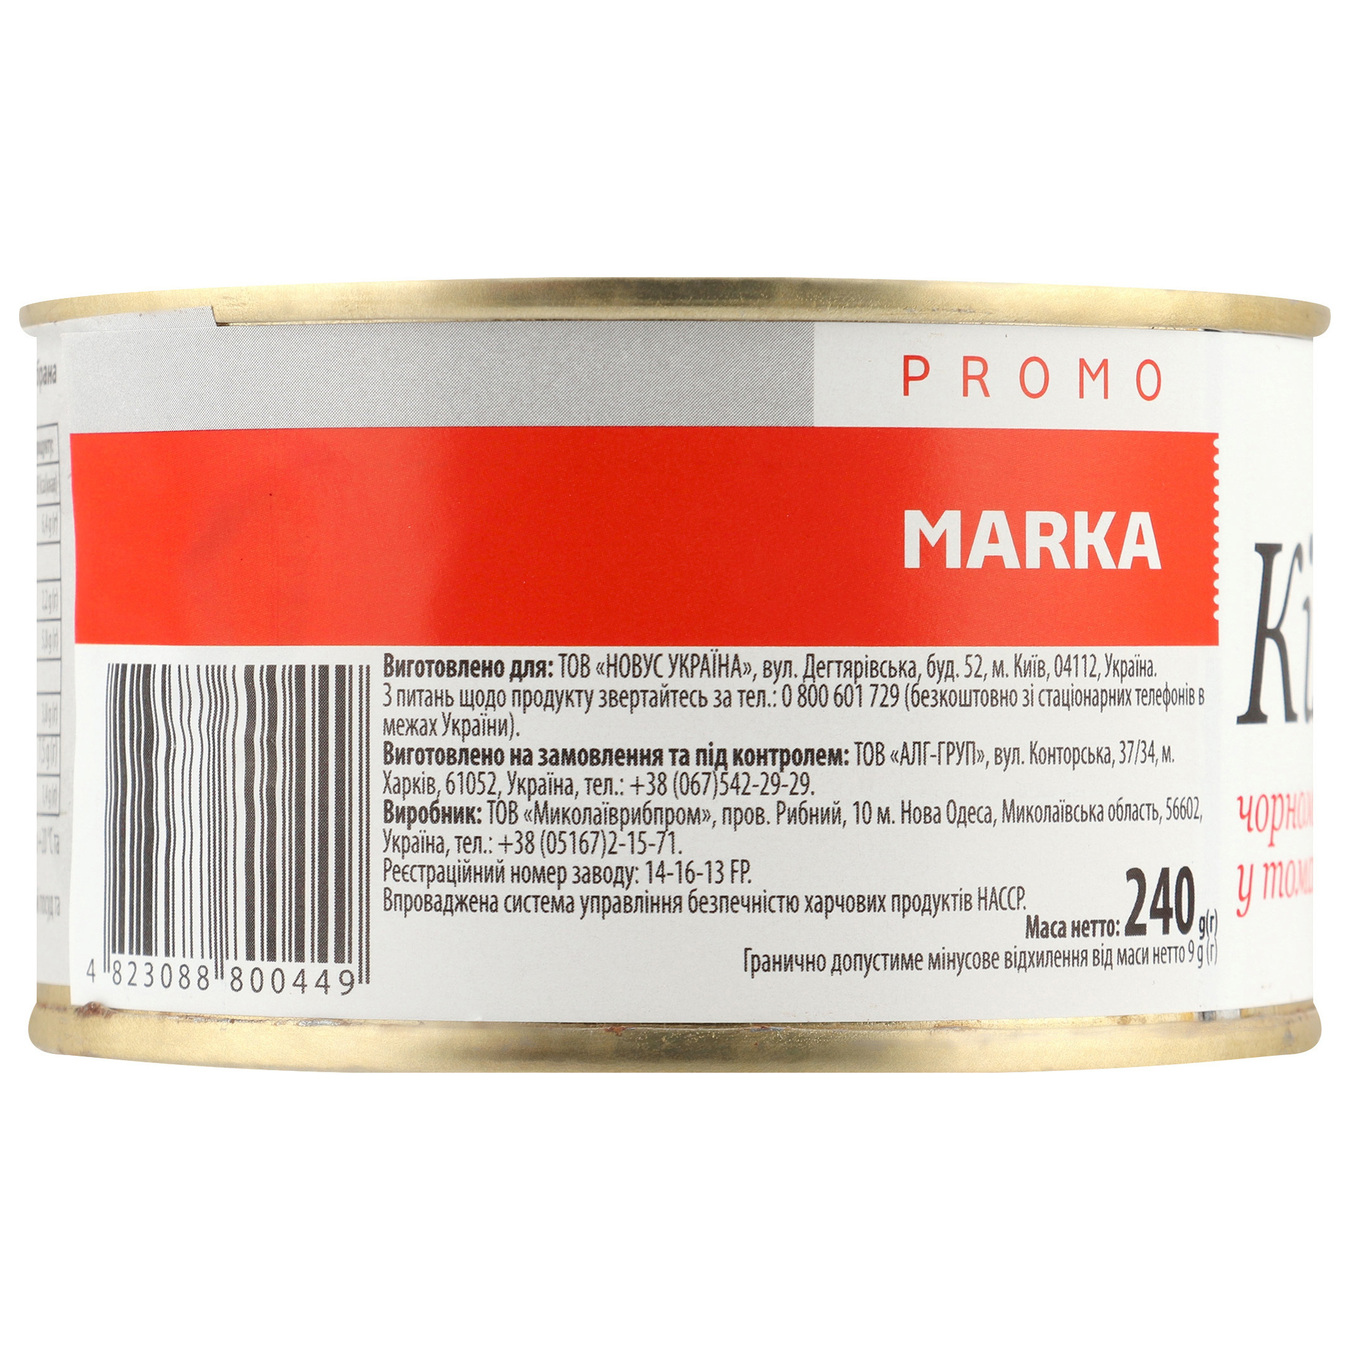 Marka Promo Black Sea Uncooked In Tomato Sauce Sprat 240g 4